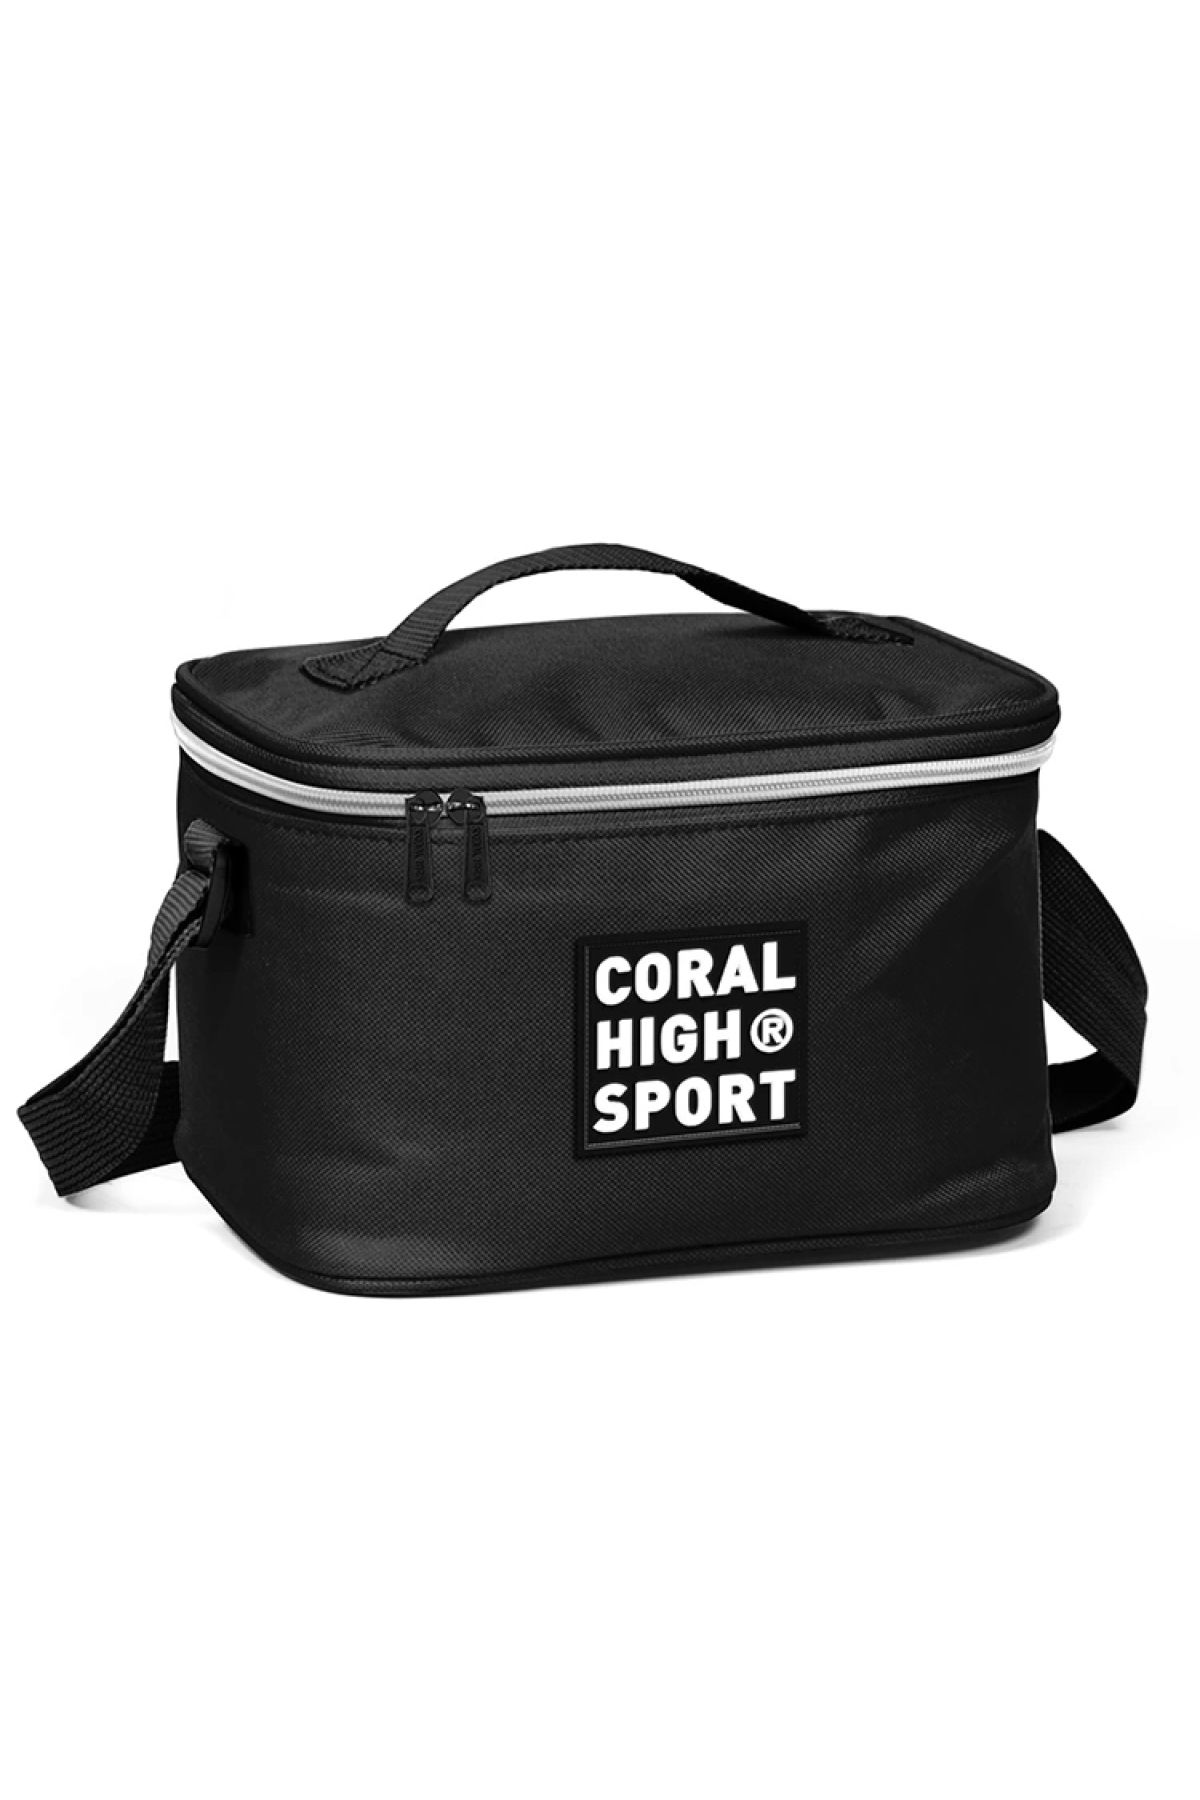 Coral High Coral Hıgh Sport 22801 Beslenme Çantası